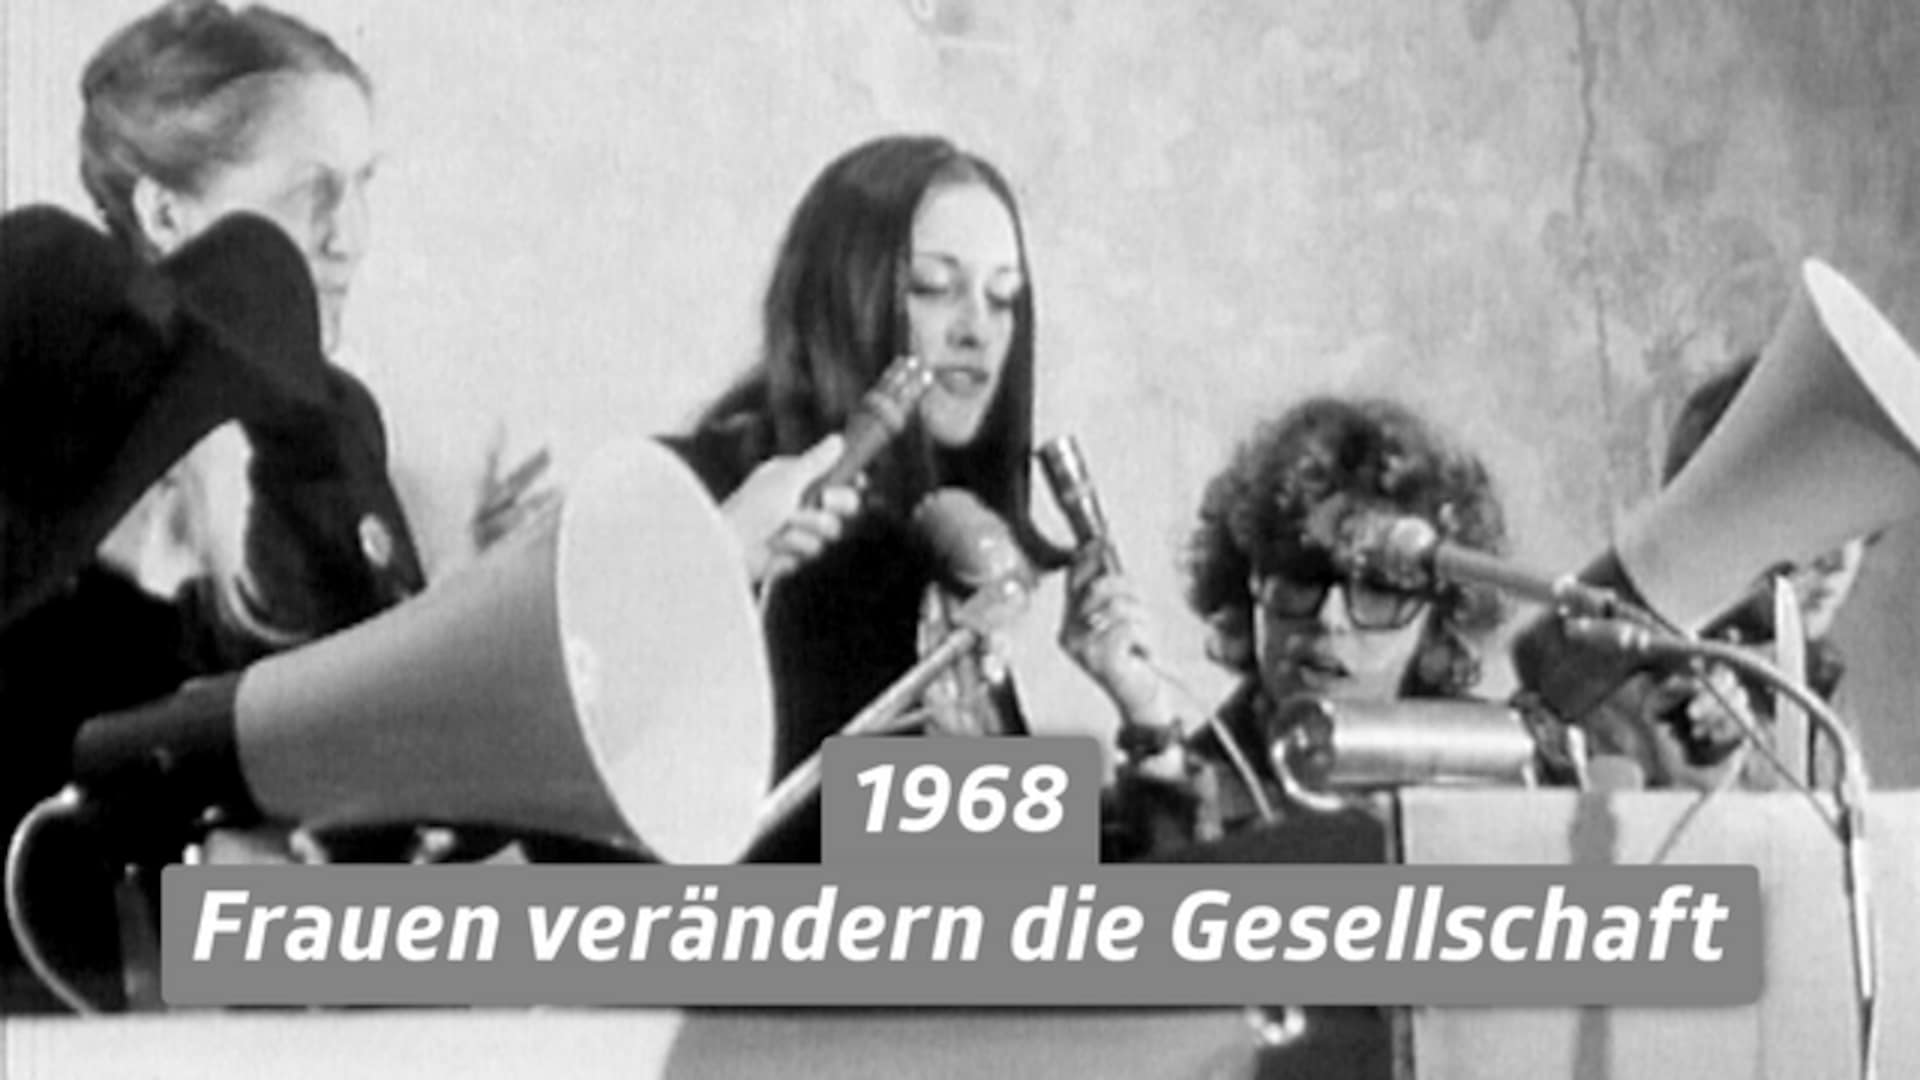 1968 - Frauen verändern die Gesellschaft